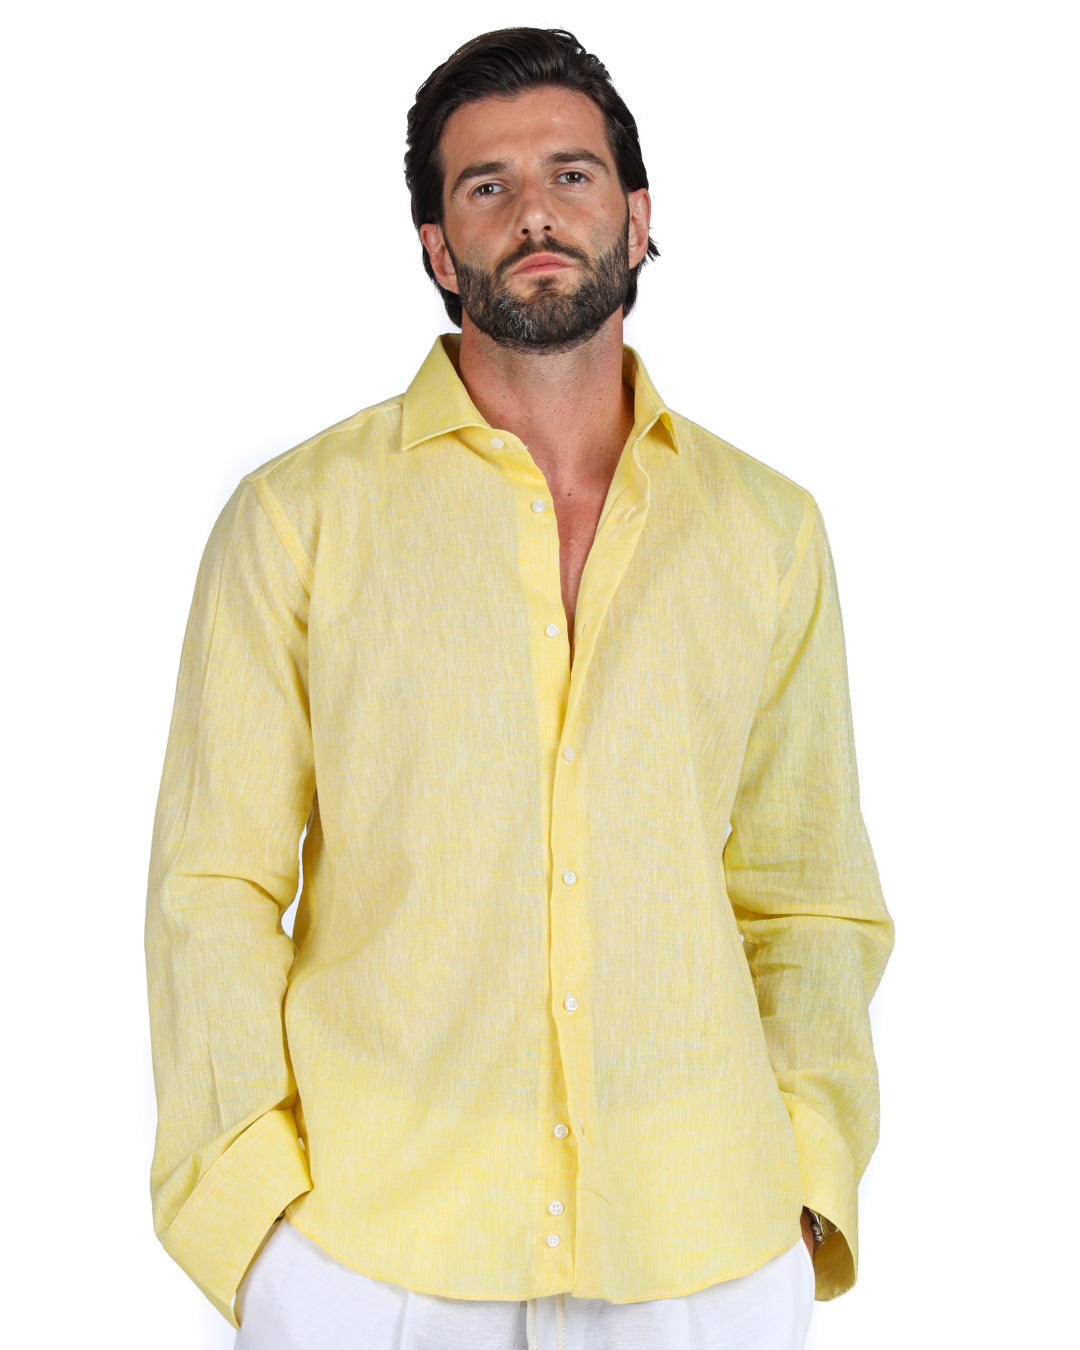 Praiano - Classic yellow linen shirt 